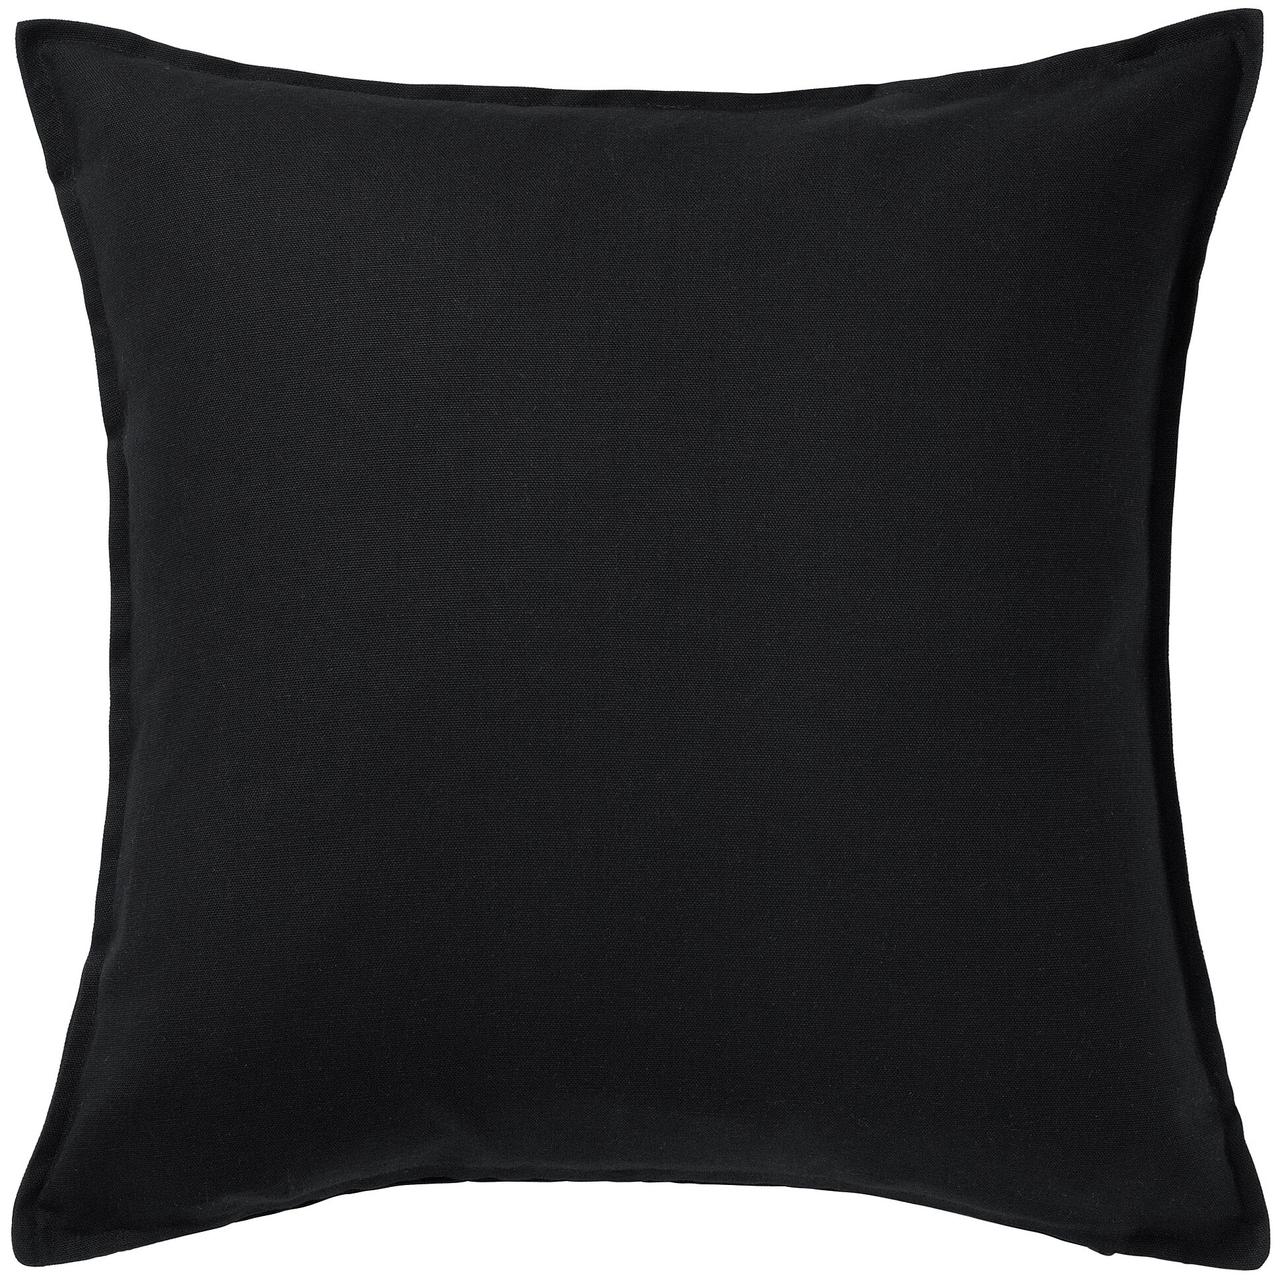 Чехол на подушку ГУРЛИ черный 50x50 см ИКЕА, IKEA